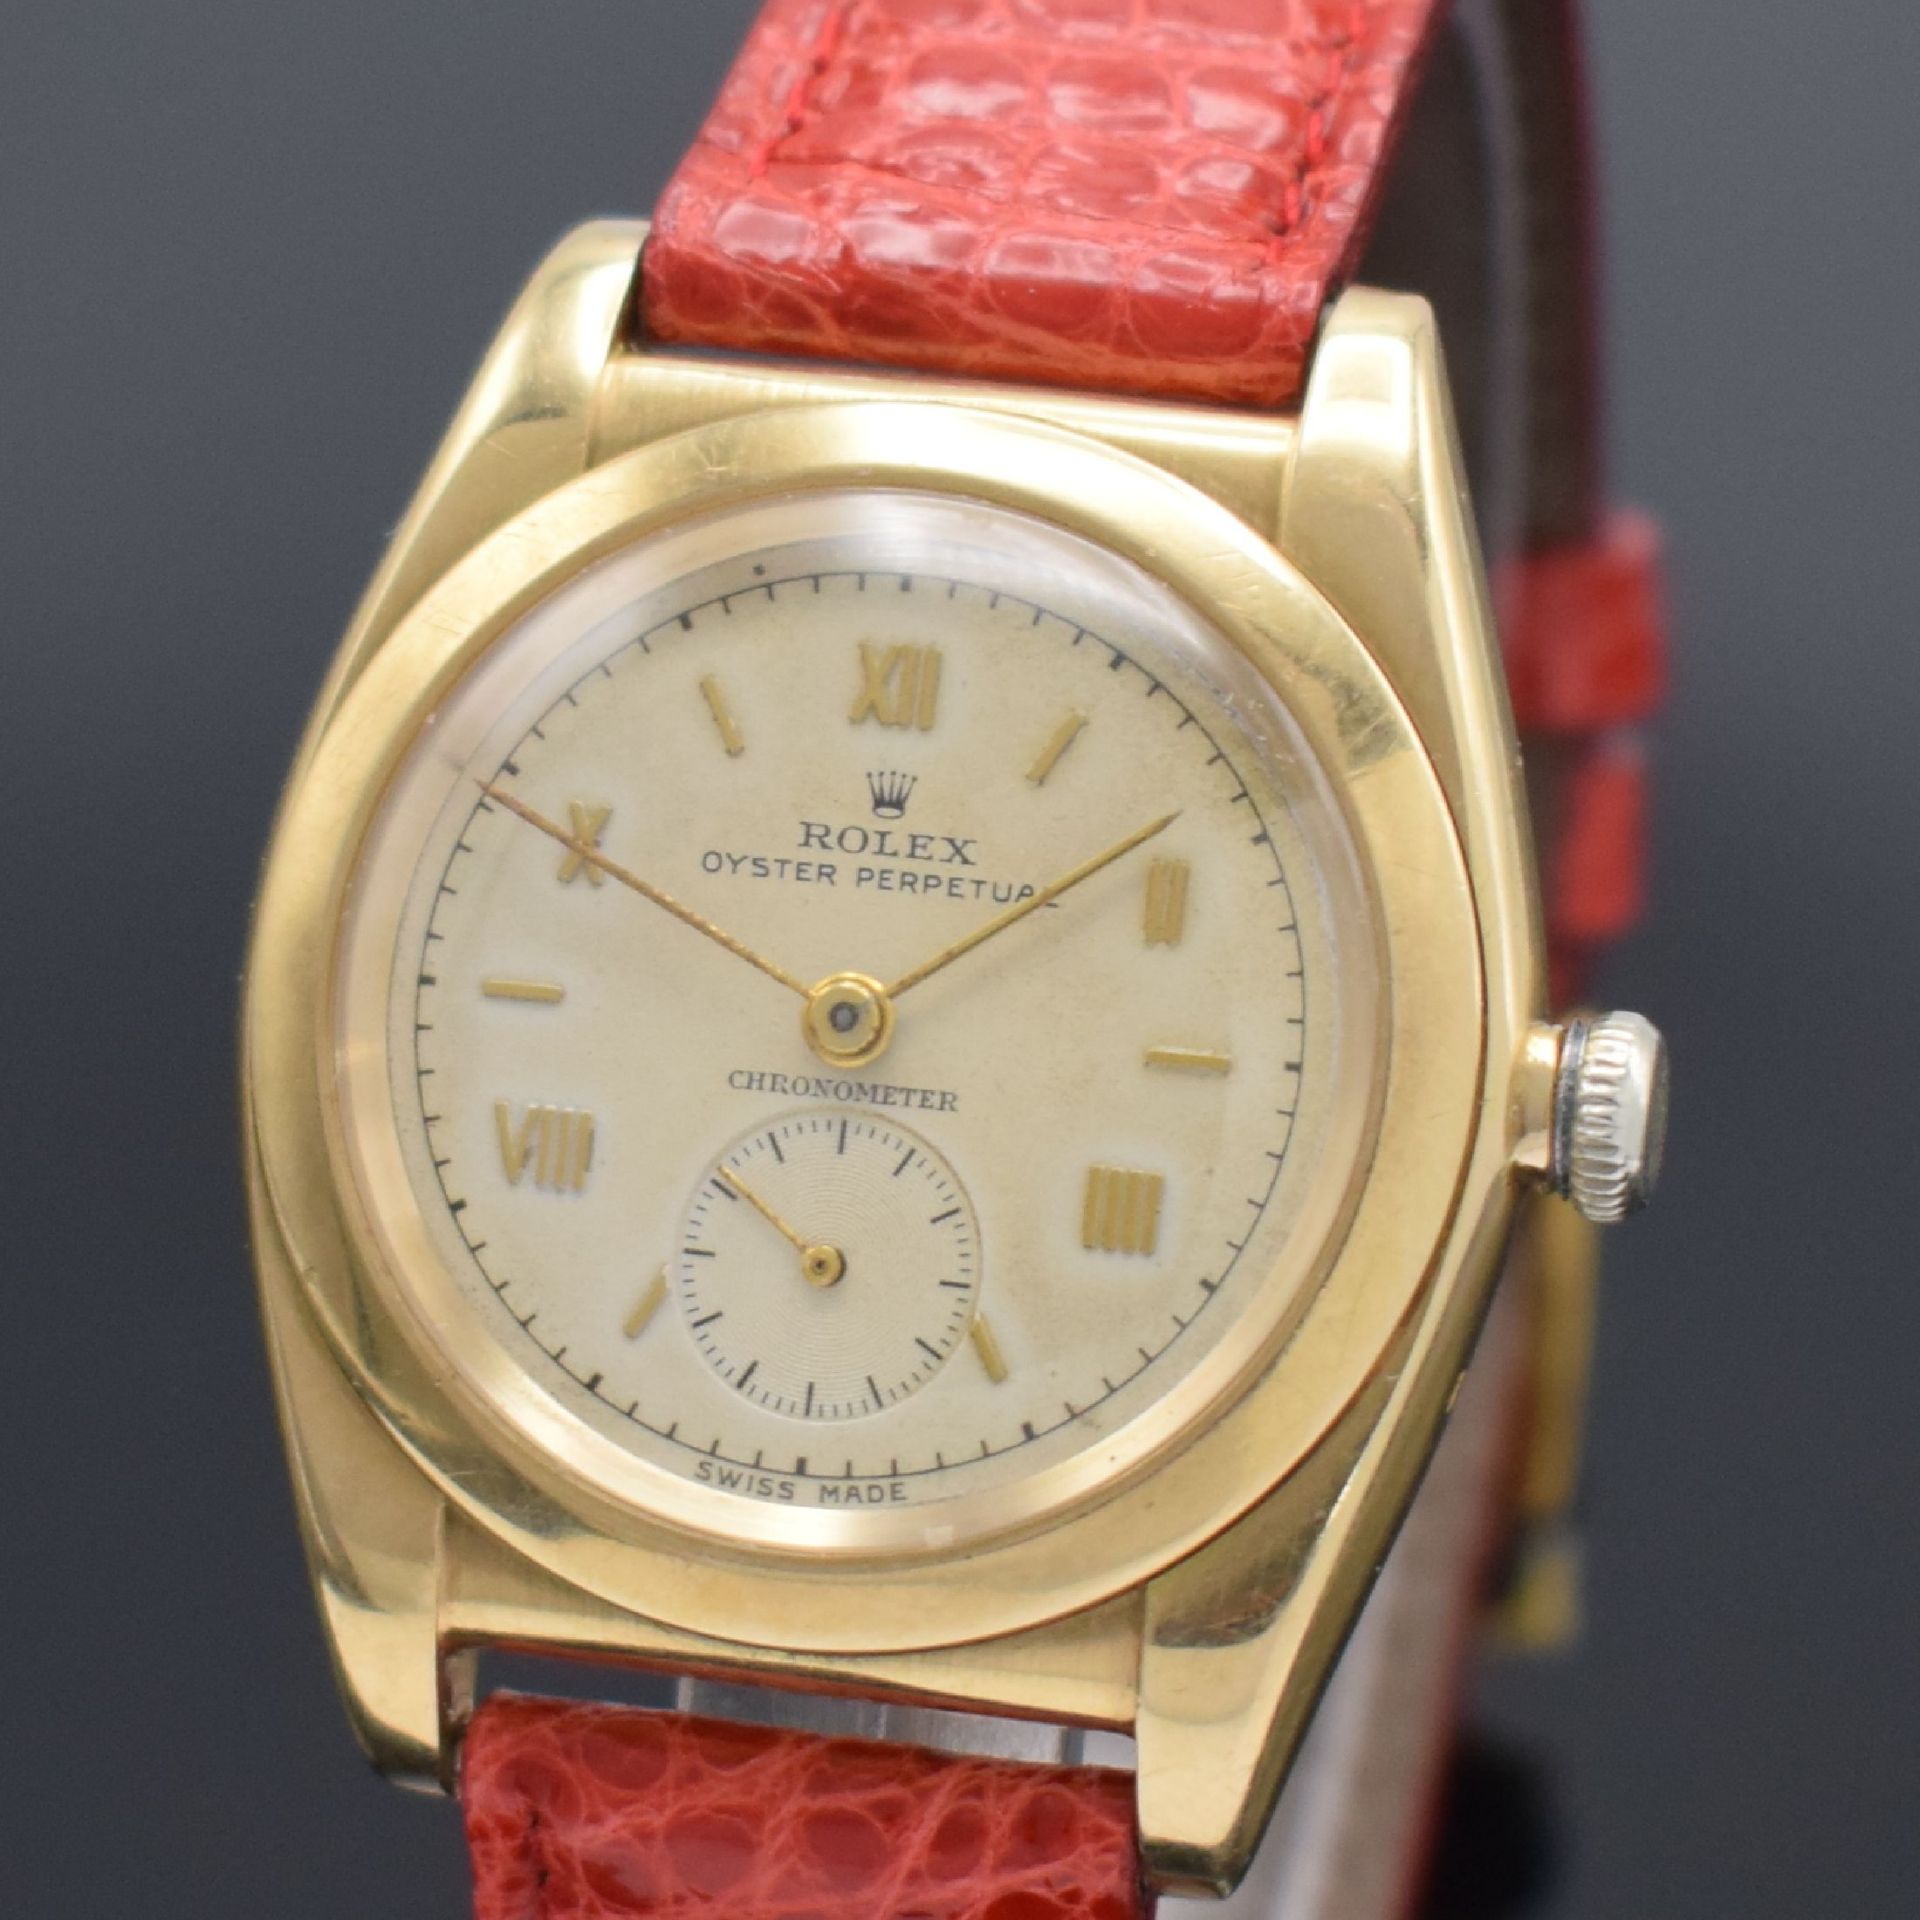 ROLEX seltene Armbanduhr Oyster Perpetual Chronometer sog. - Bild 2 aus 4